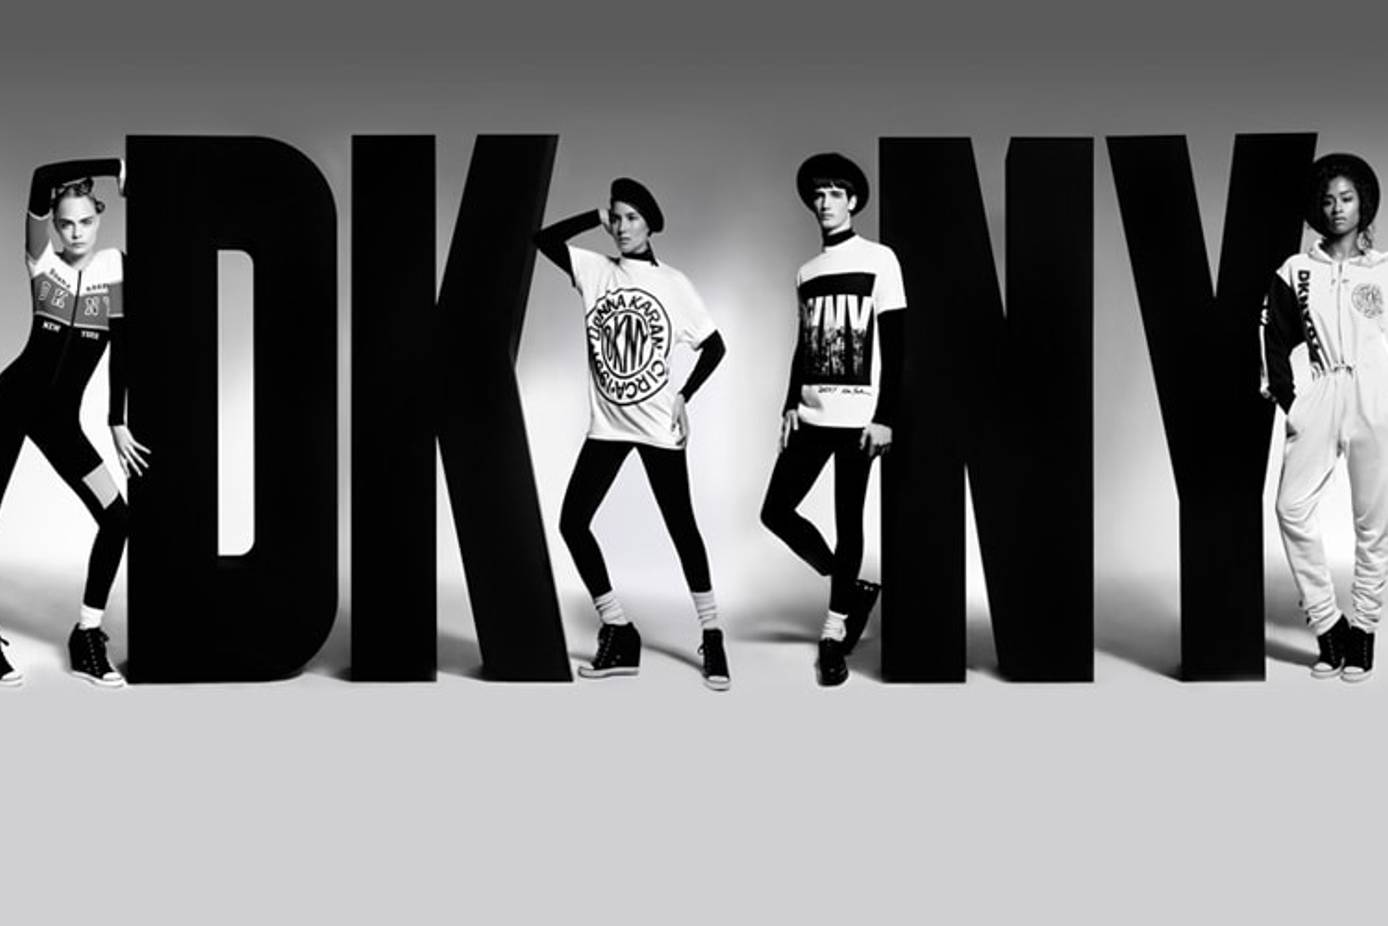 Dao-Yi Chow and Maxwell Osborne Named DKNY Creative Directors